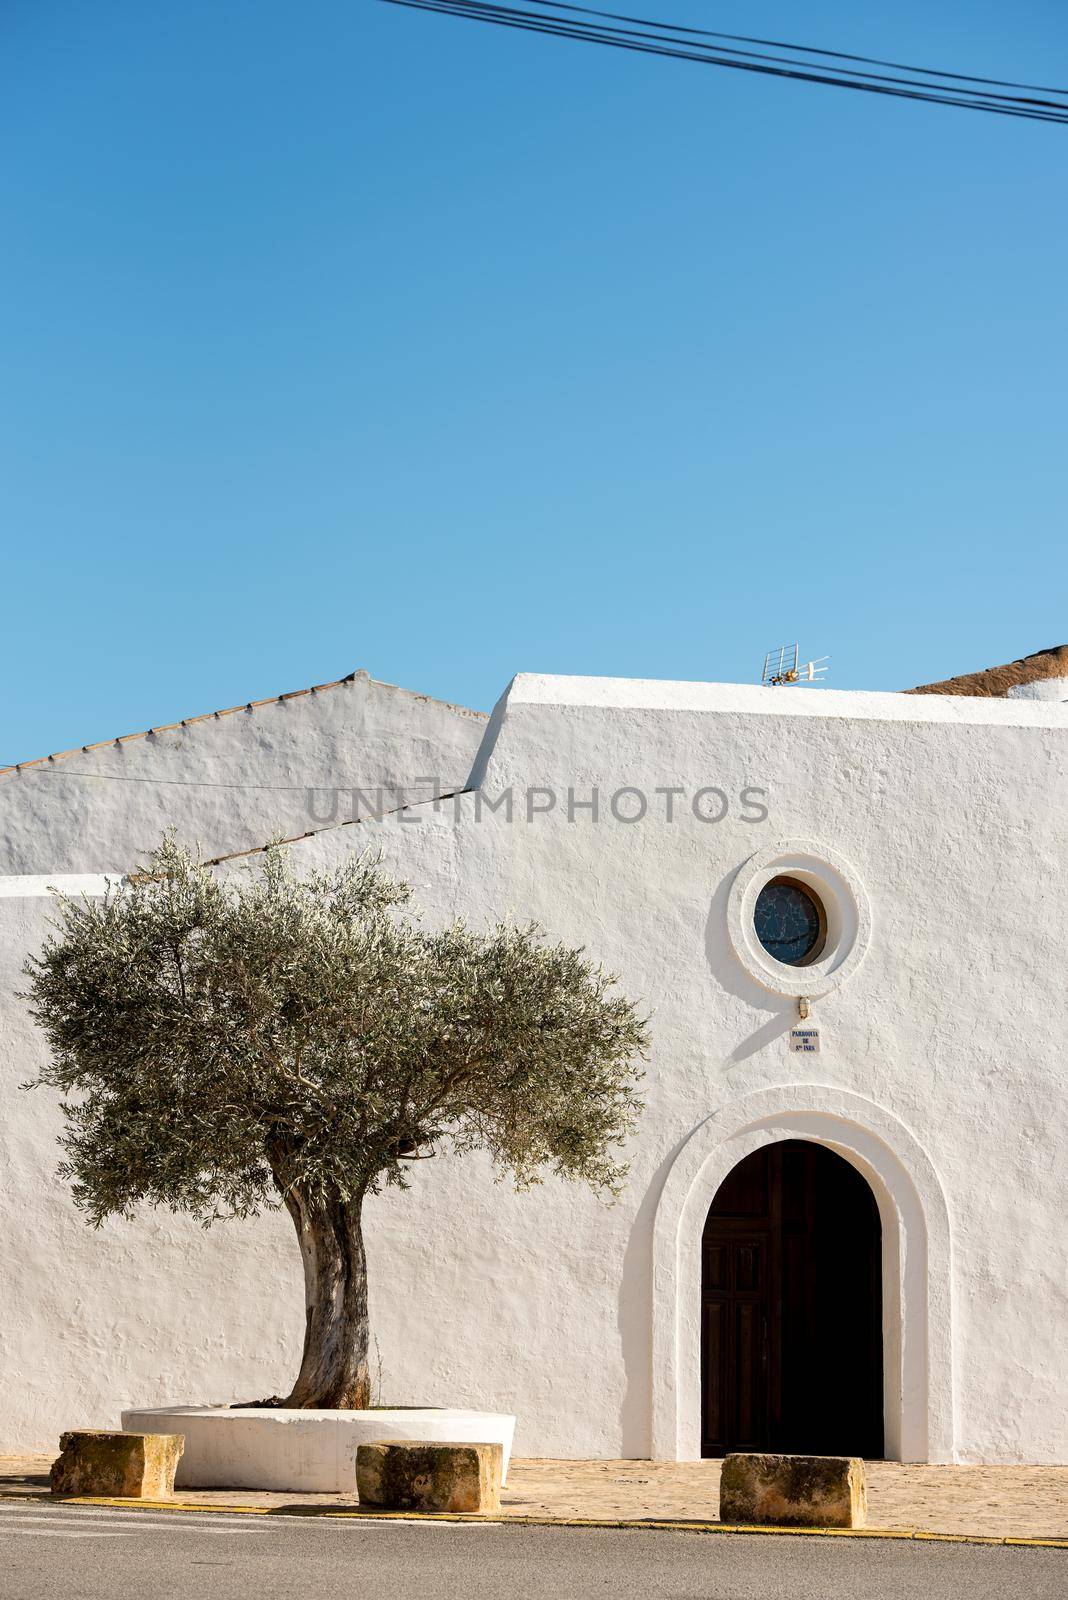 Old White Church of Santa Anges de la Corona, Ibiza, Spain.